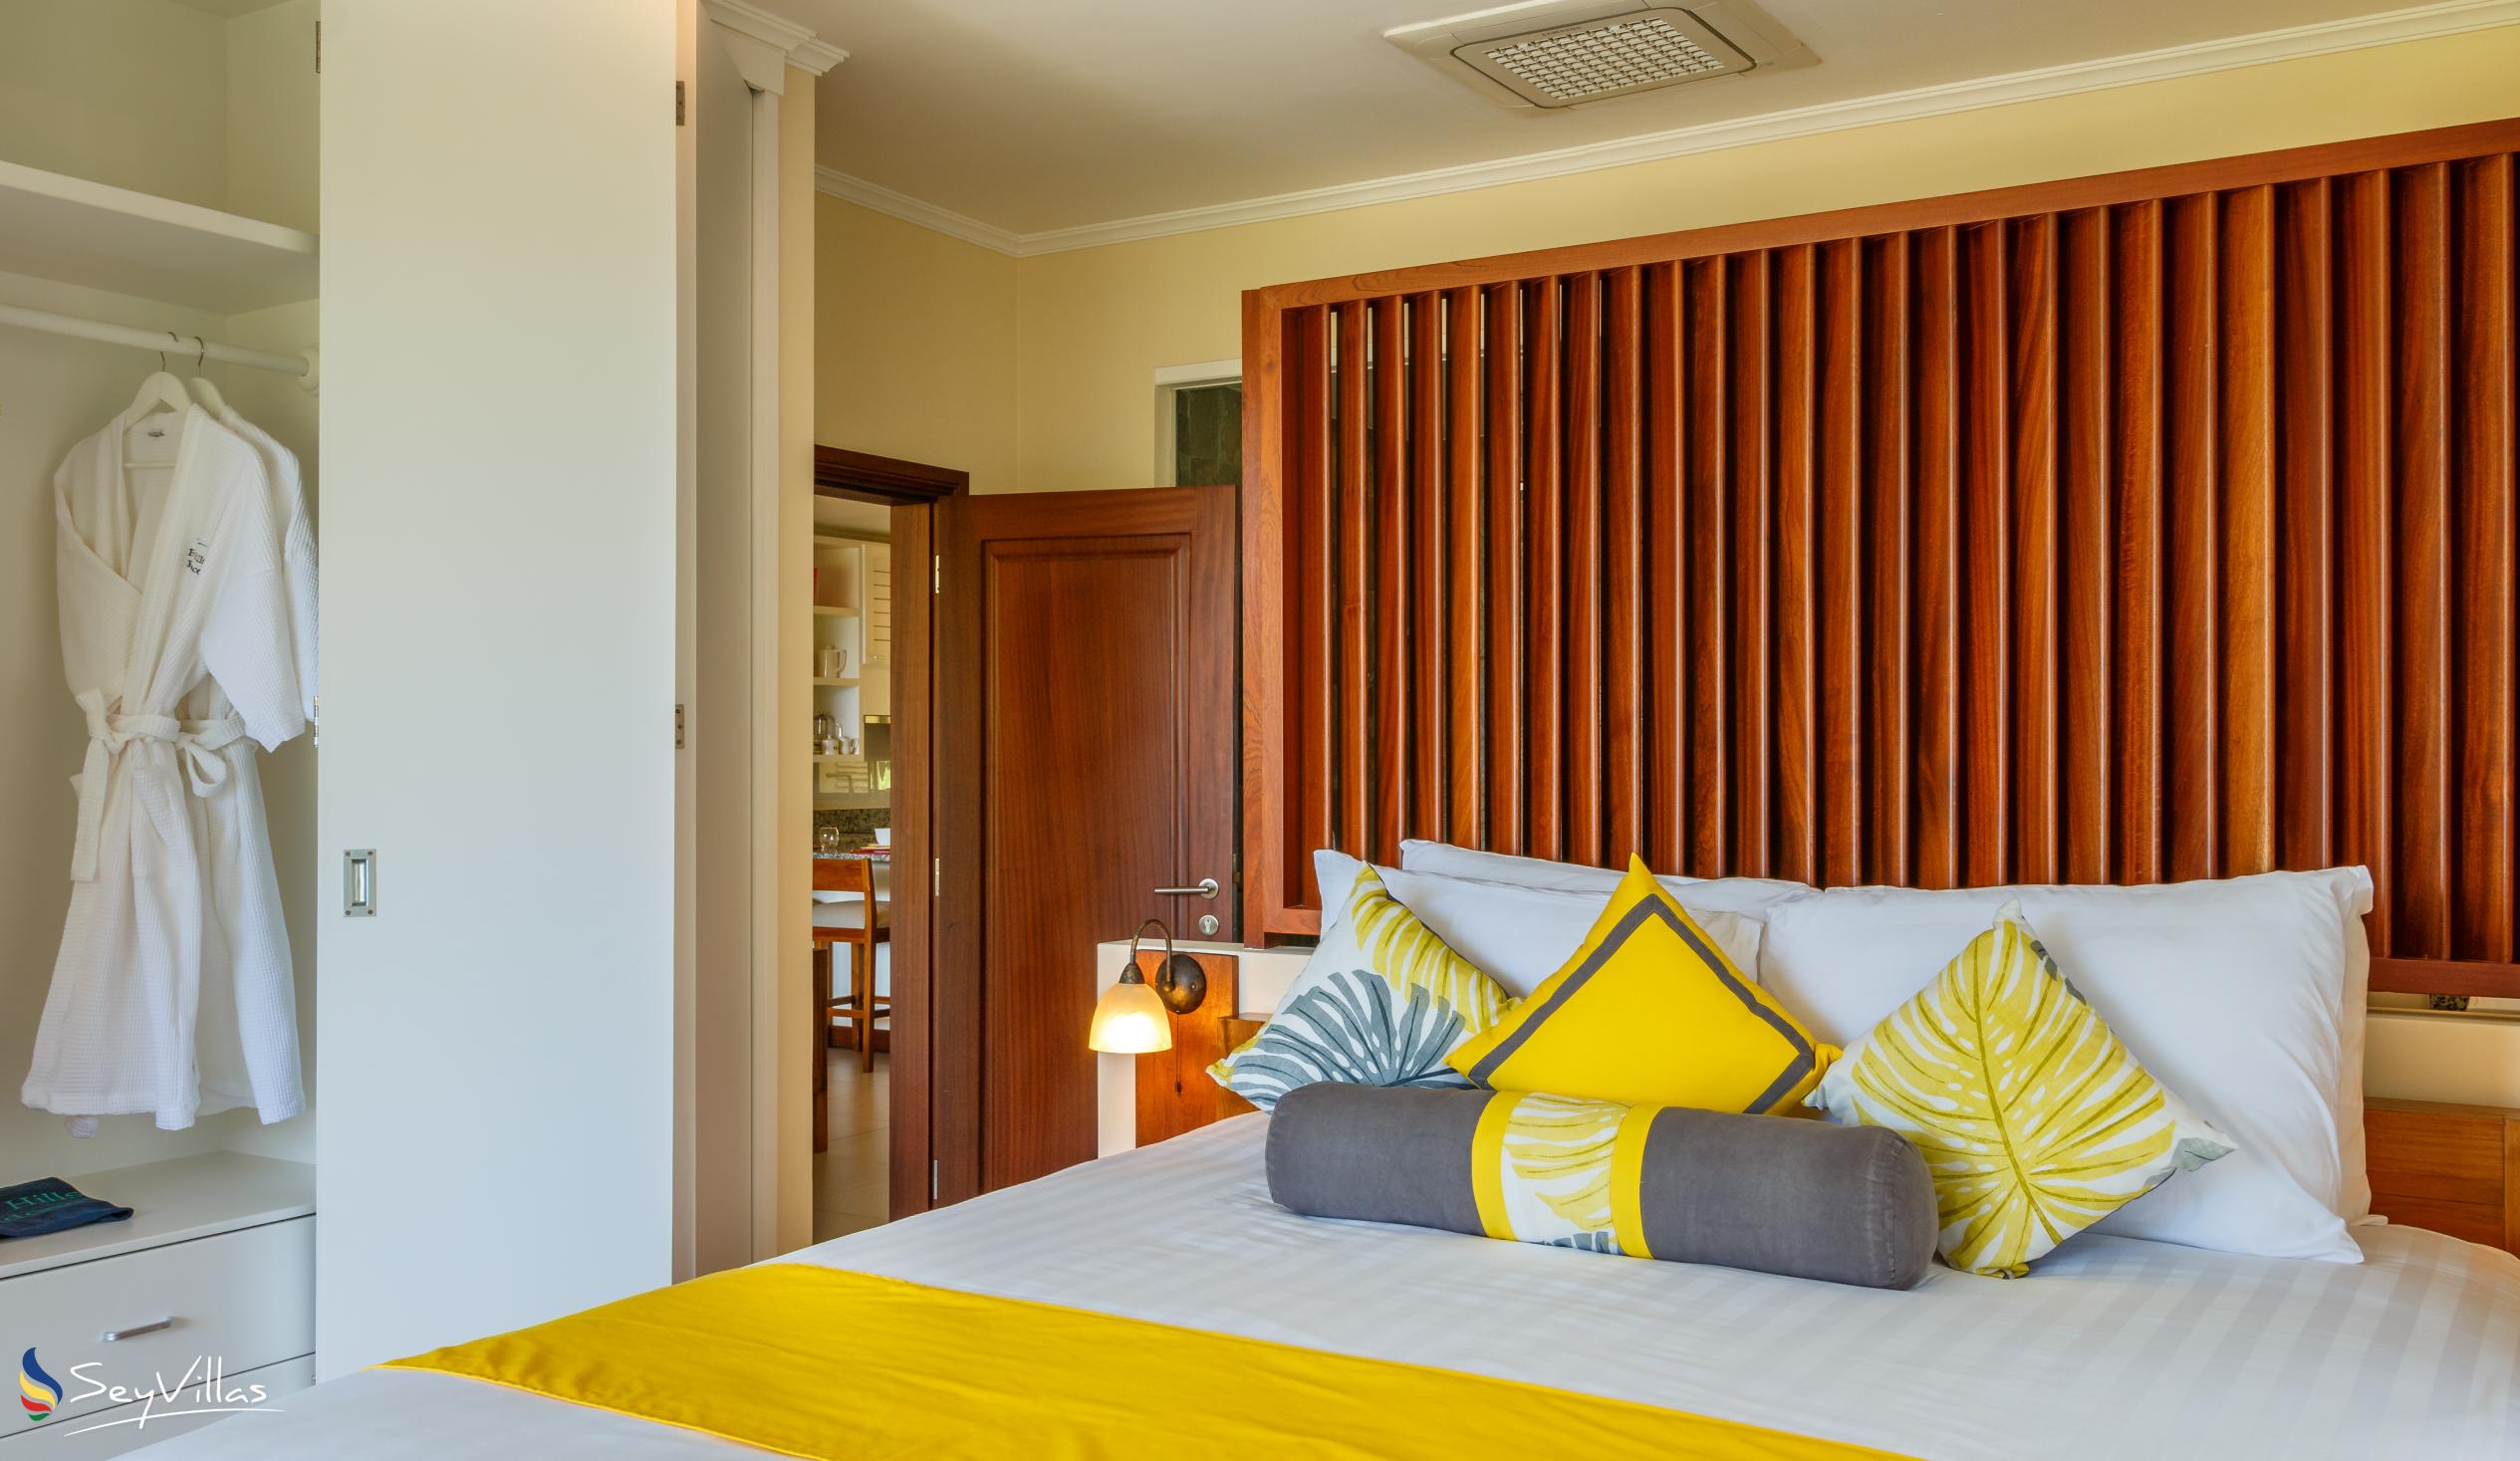 Photo 45: Eden Hills Residence - 2-Bedroom Apartment - Mahé (Seychelles)